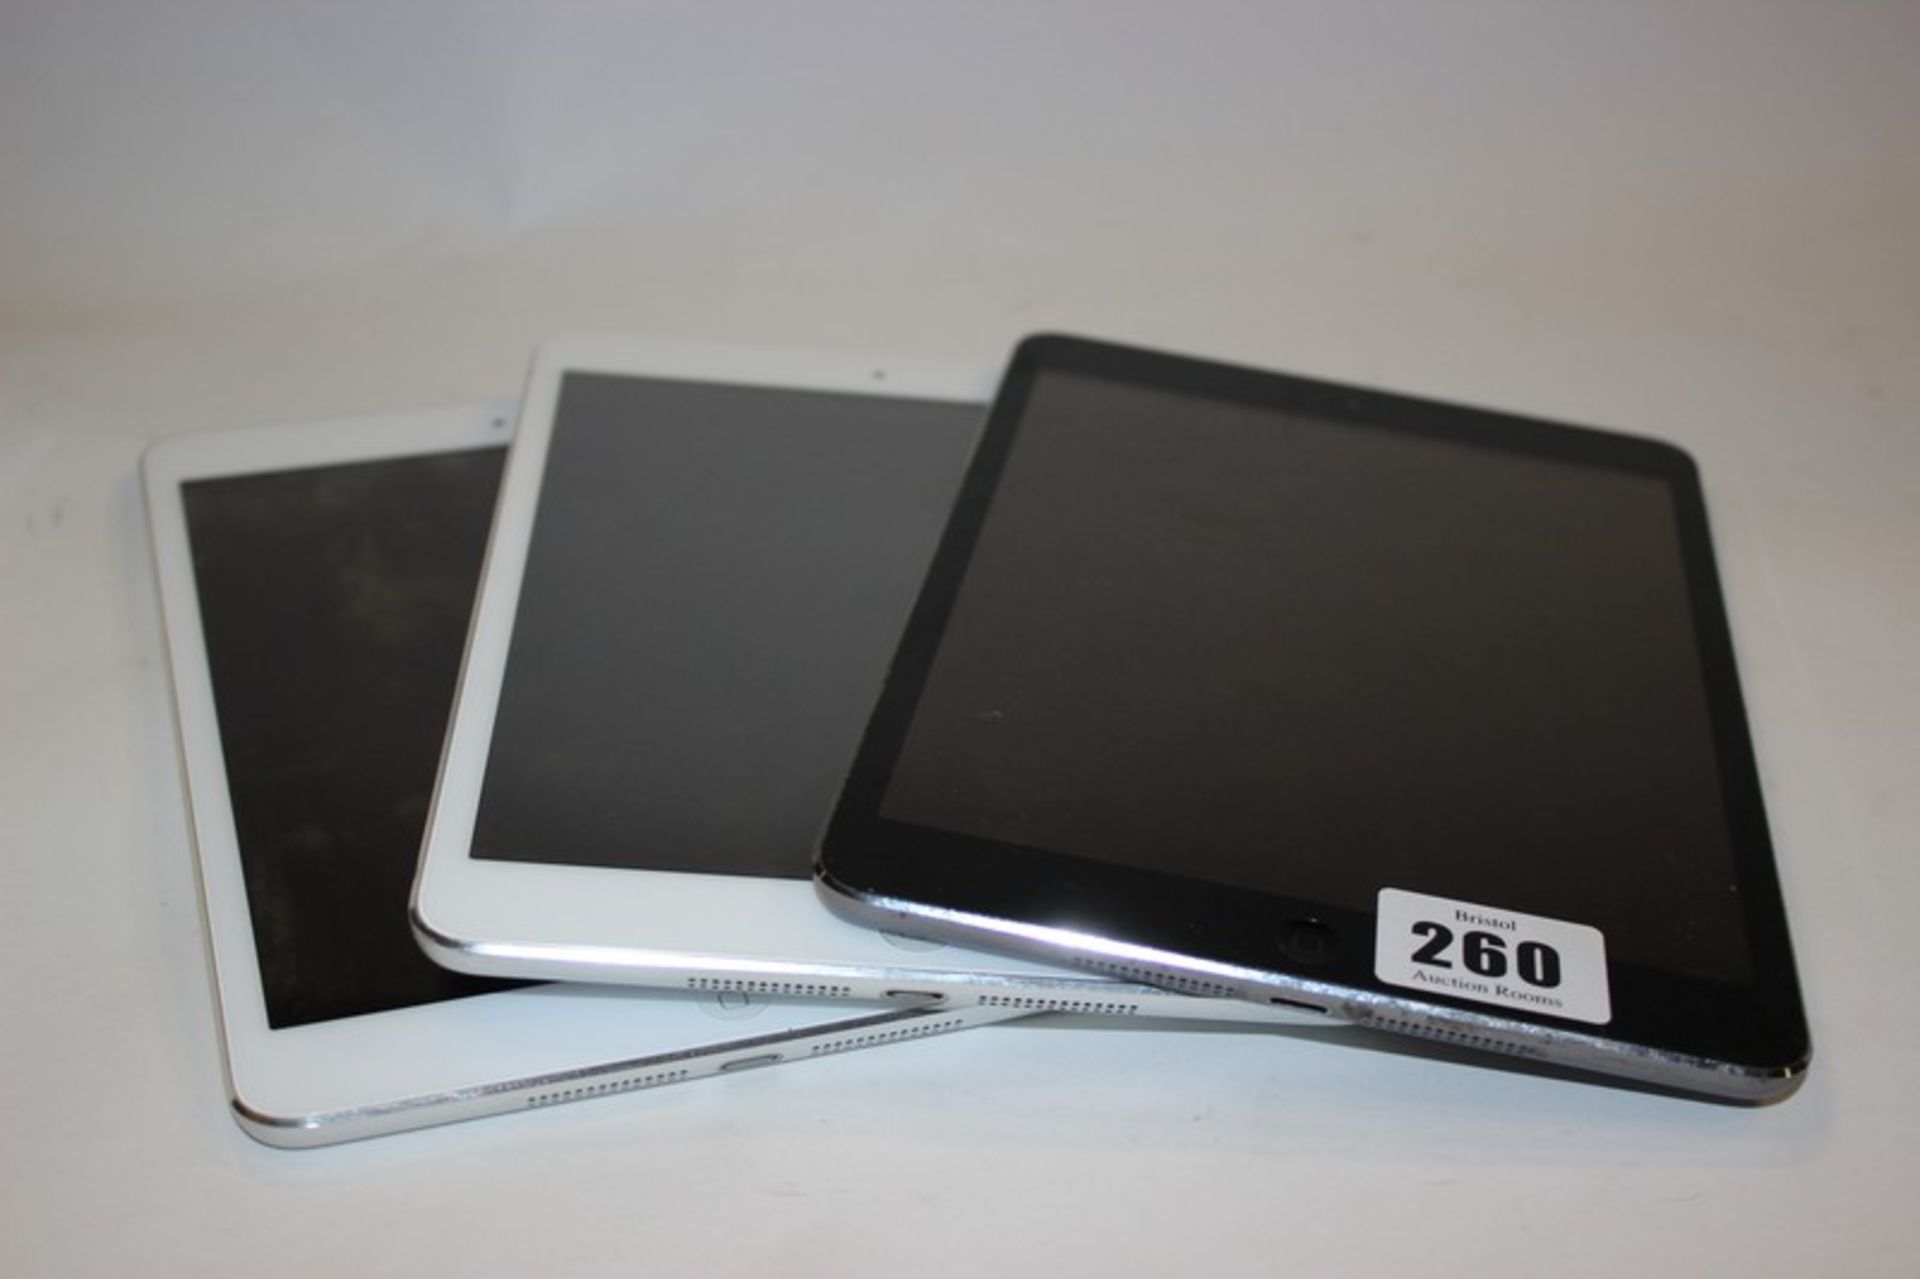 Three iPad Mini 4 A1489 serial: F9FRM40RFCM9, F4LMD728FCM8 and FGHP6013FCM5 (All activation